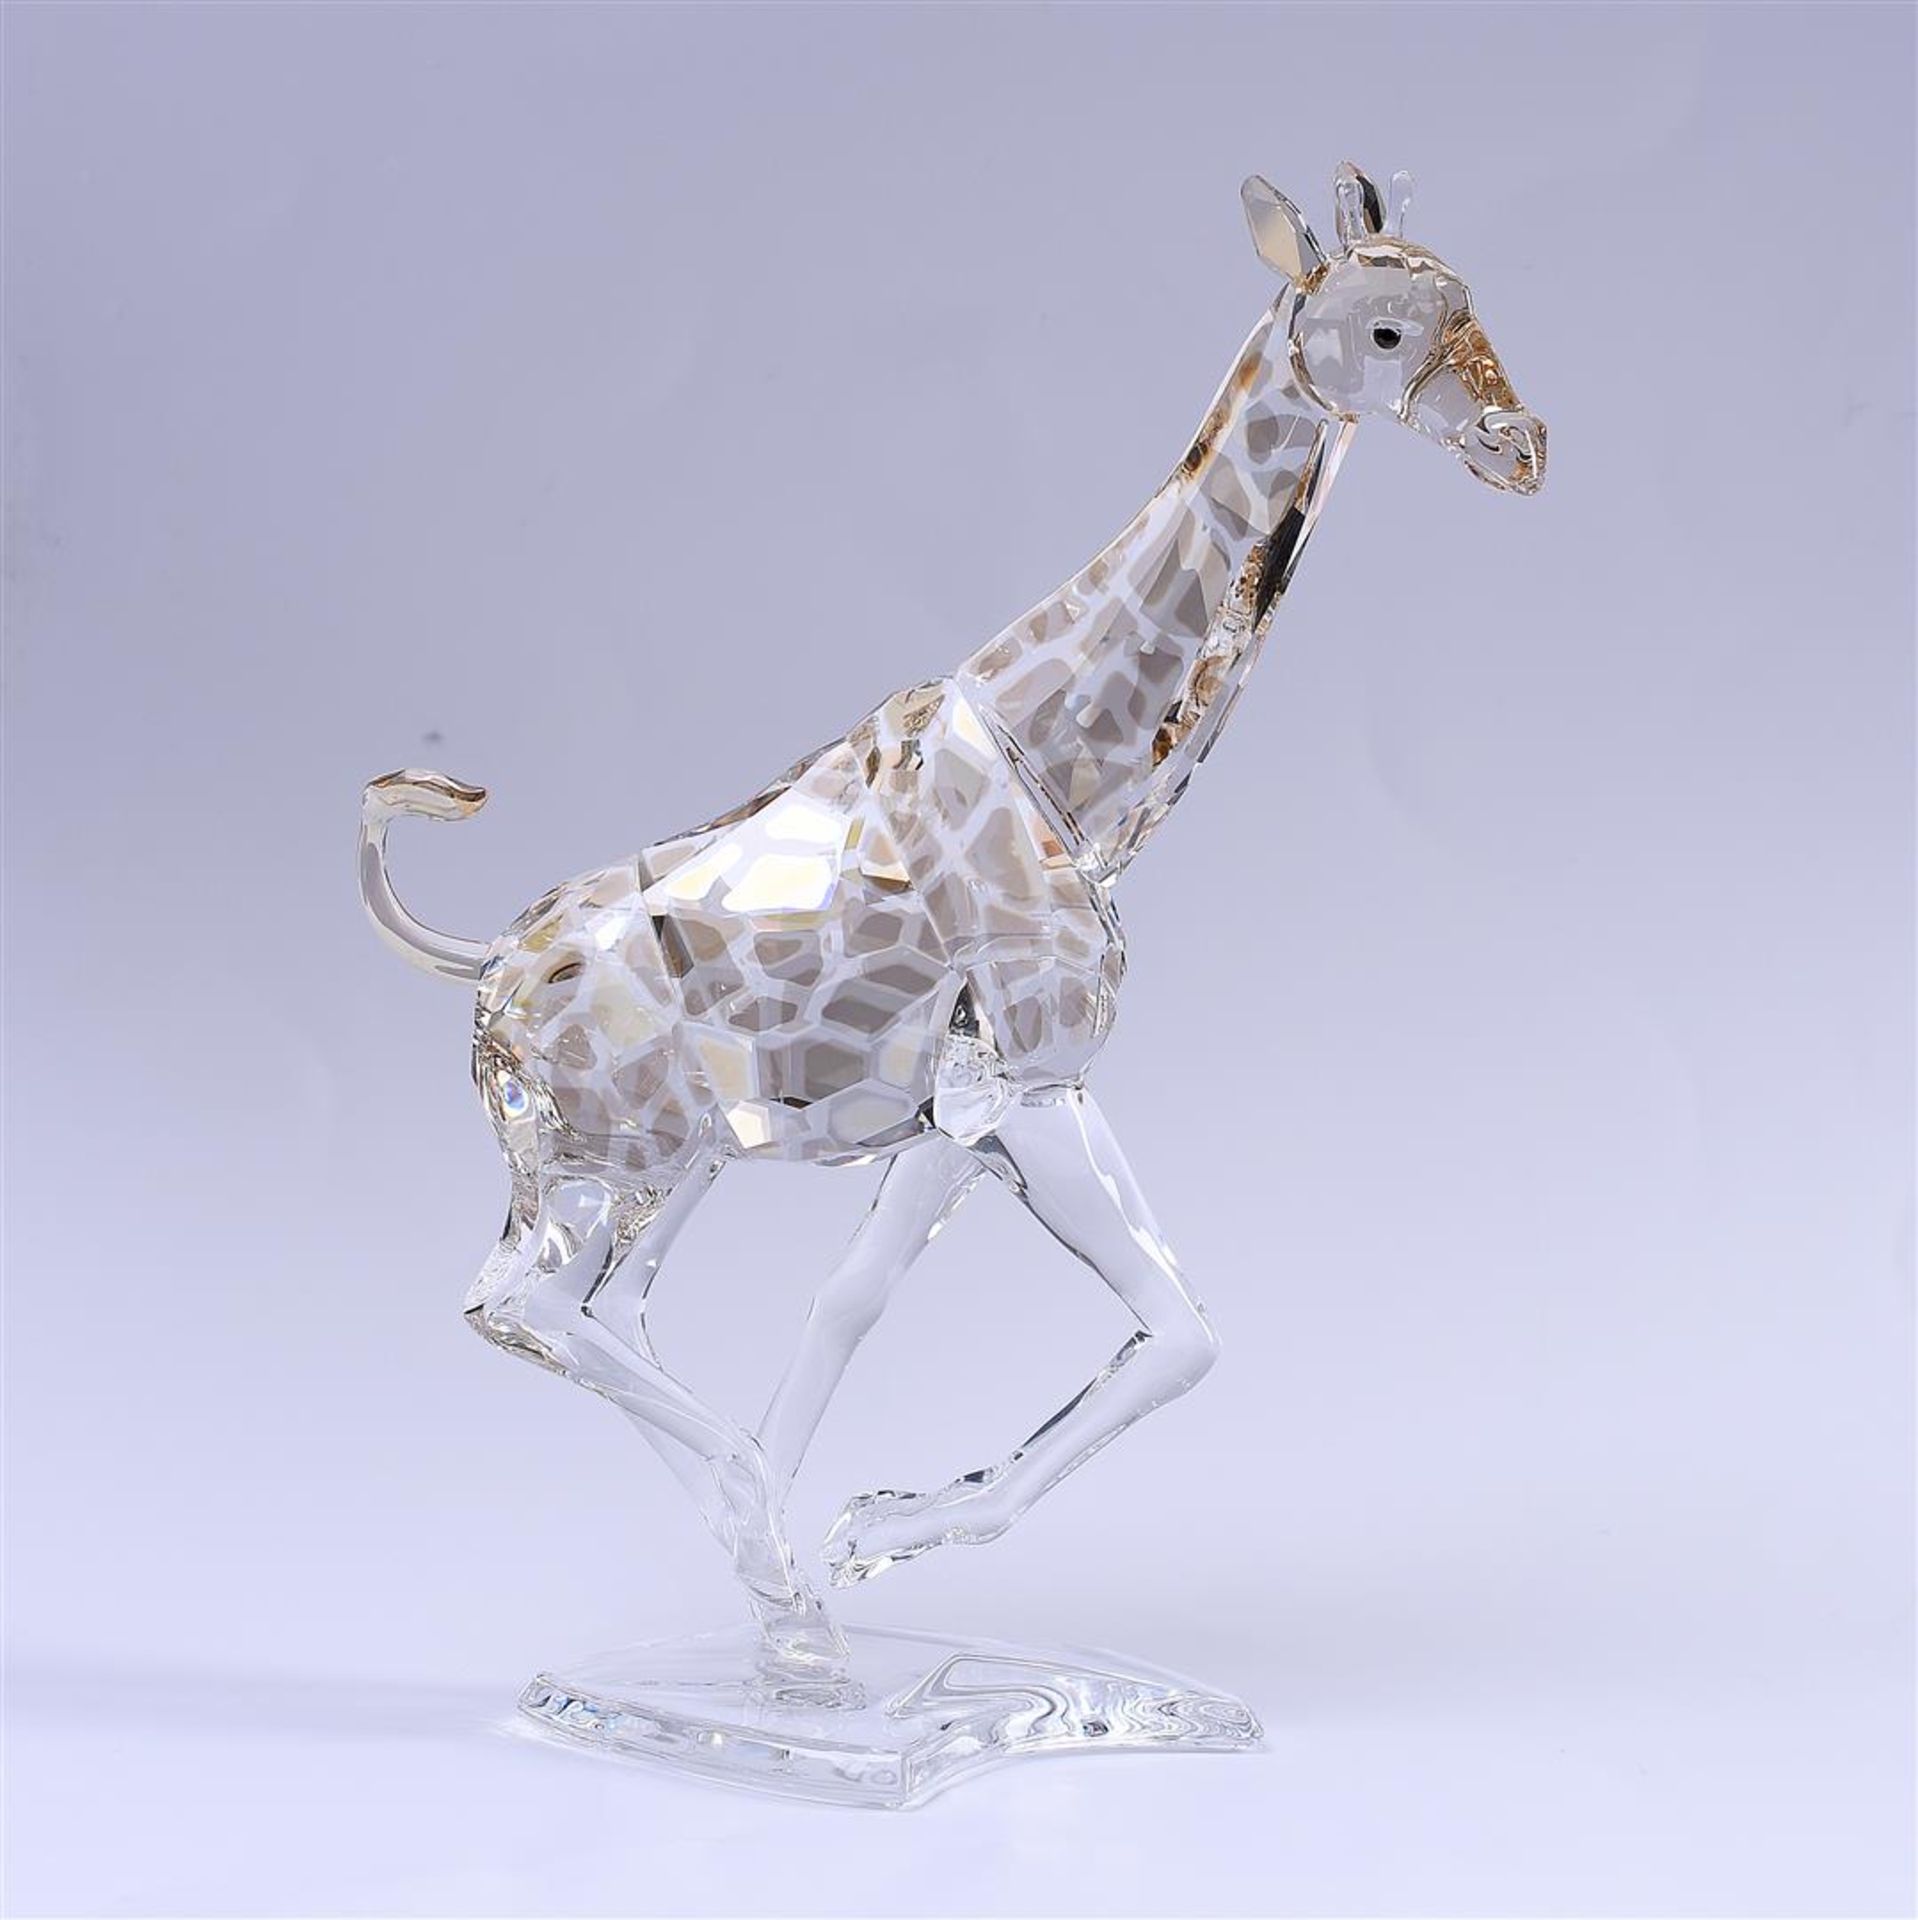 Swarovski, Giraffe, Year of Release 2012, 935896. Includes original box.
17 x 12 cm. - Image 6 of 8